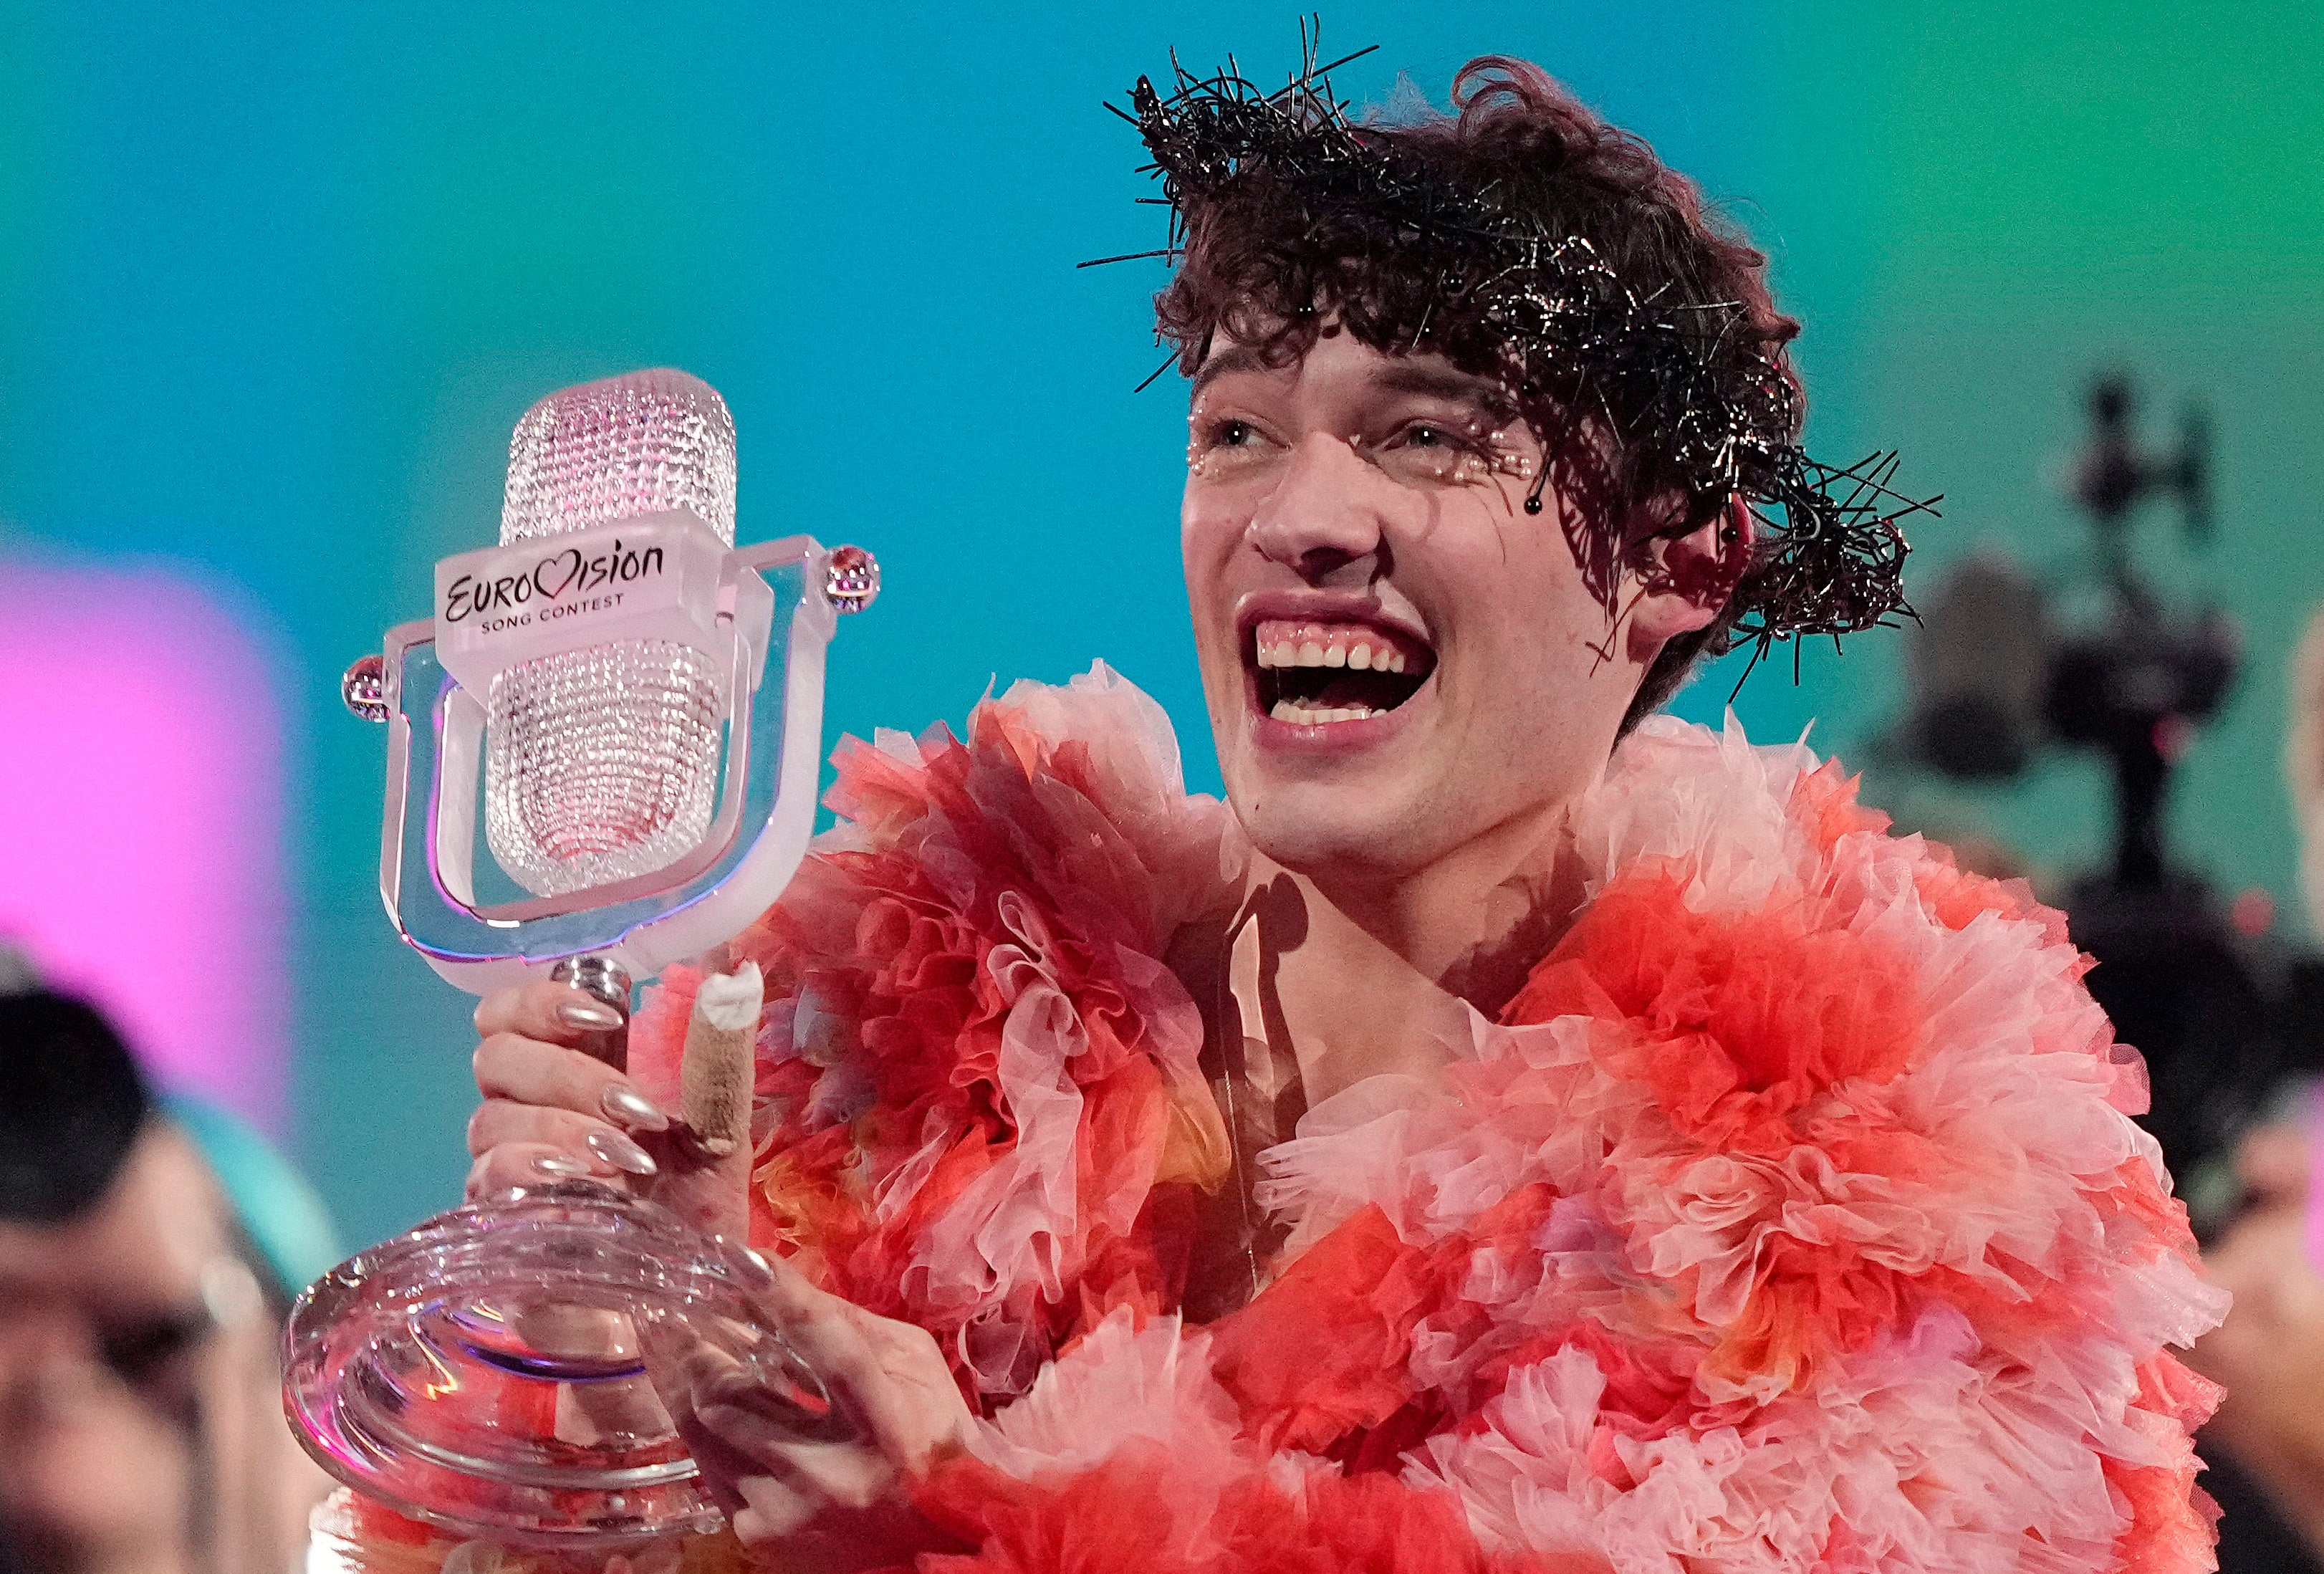 Switzerland’s Eurovision champion Nemo